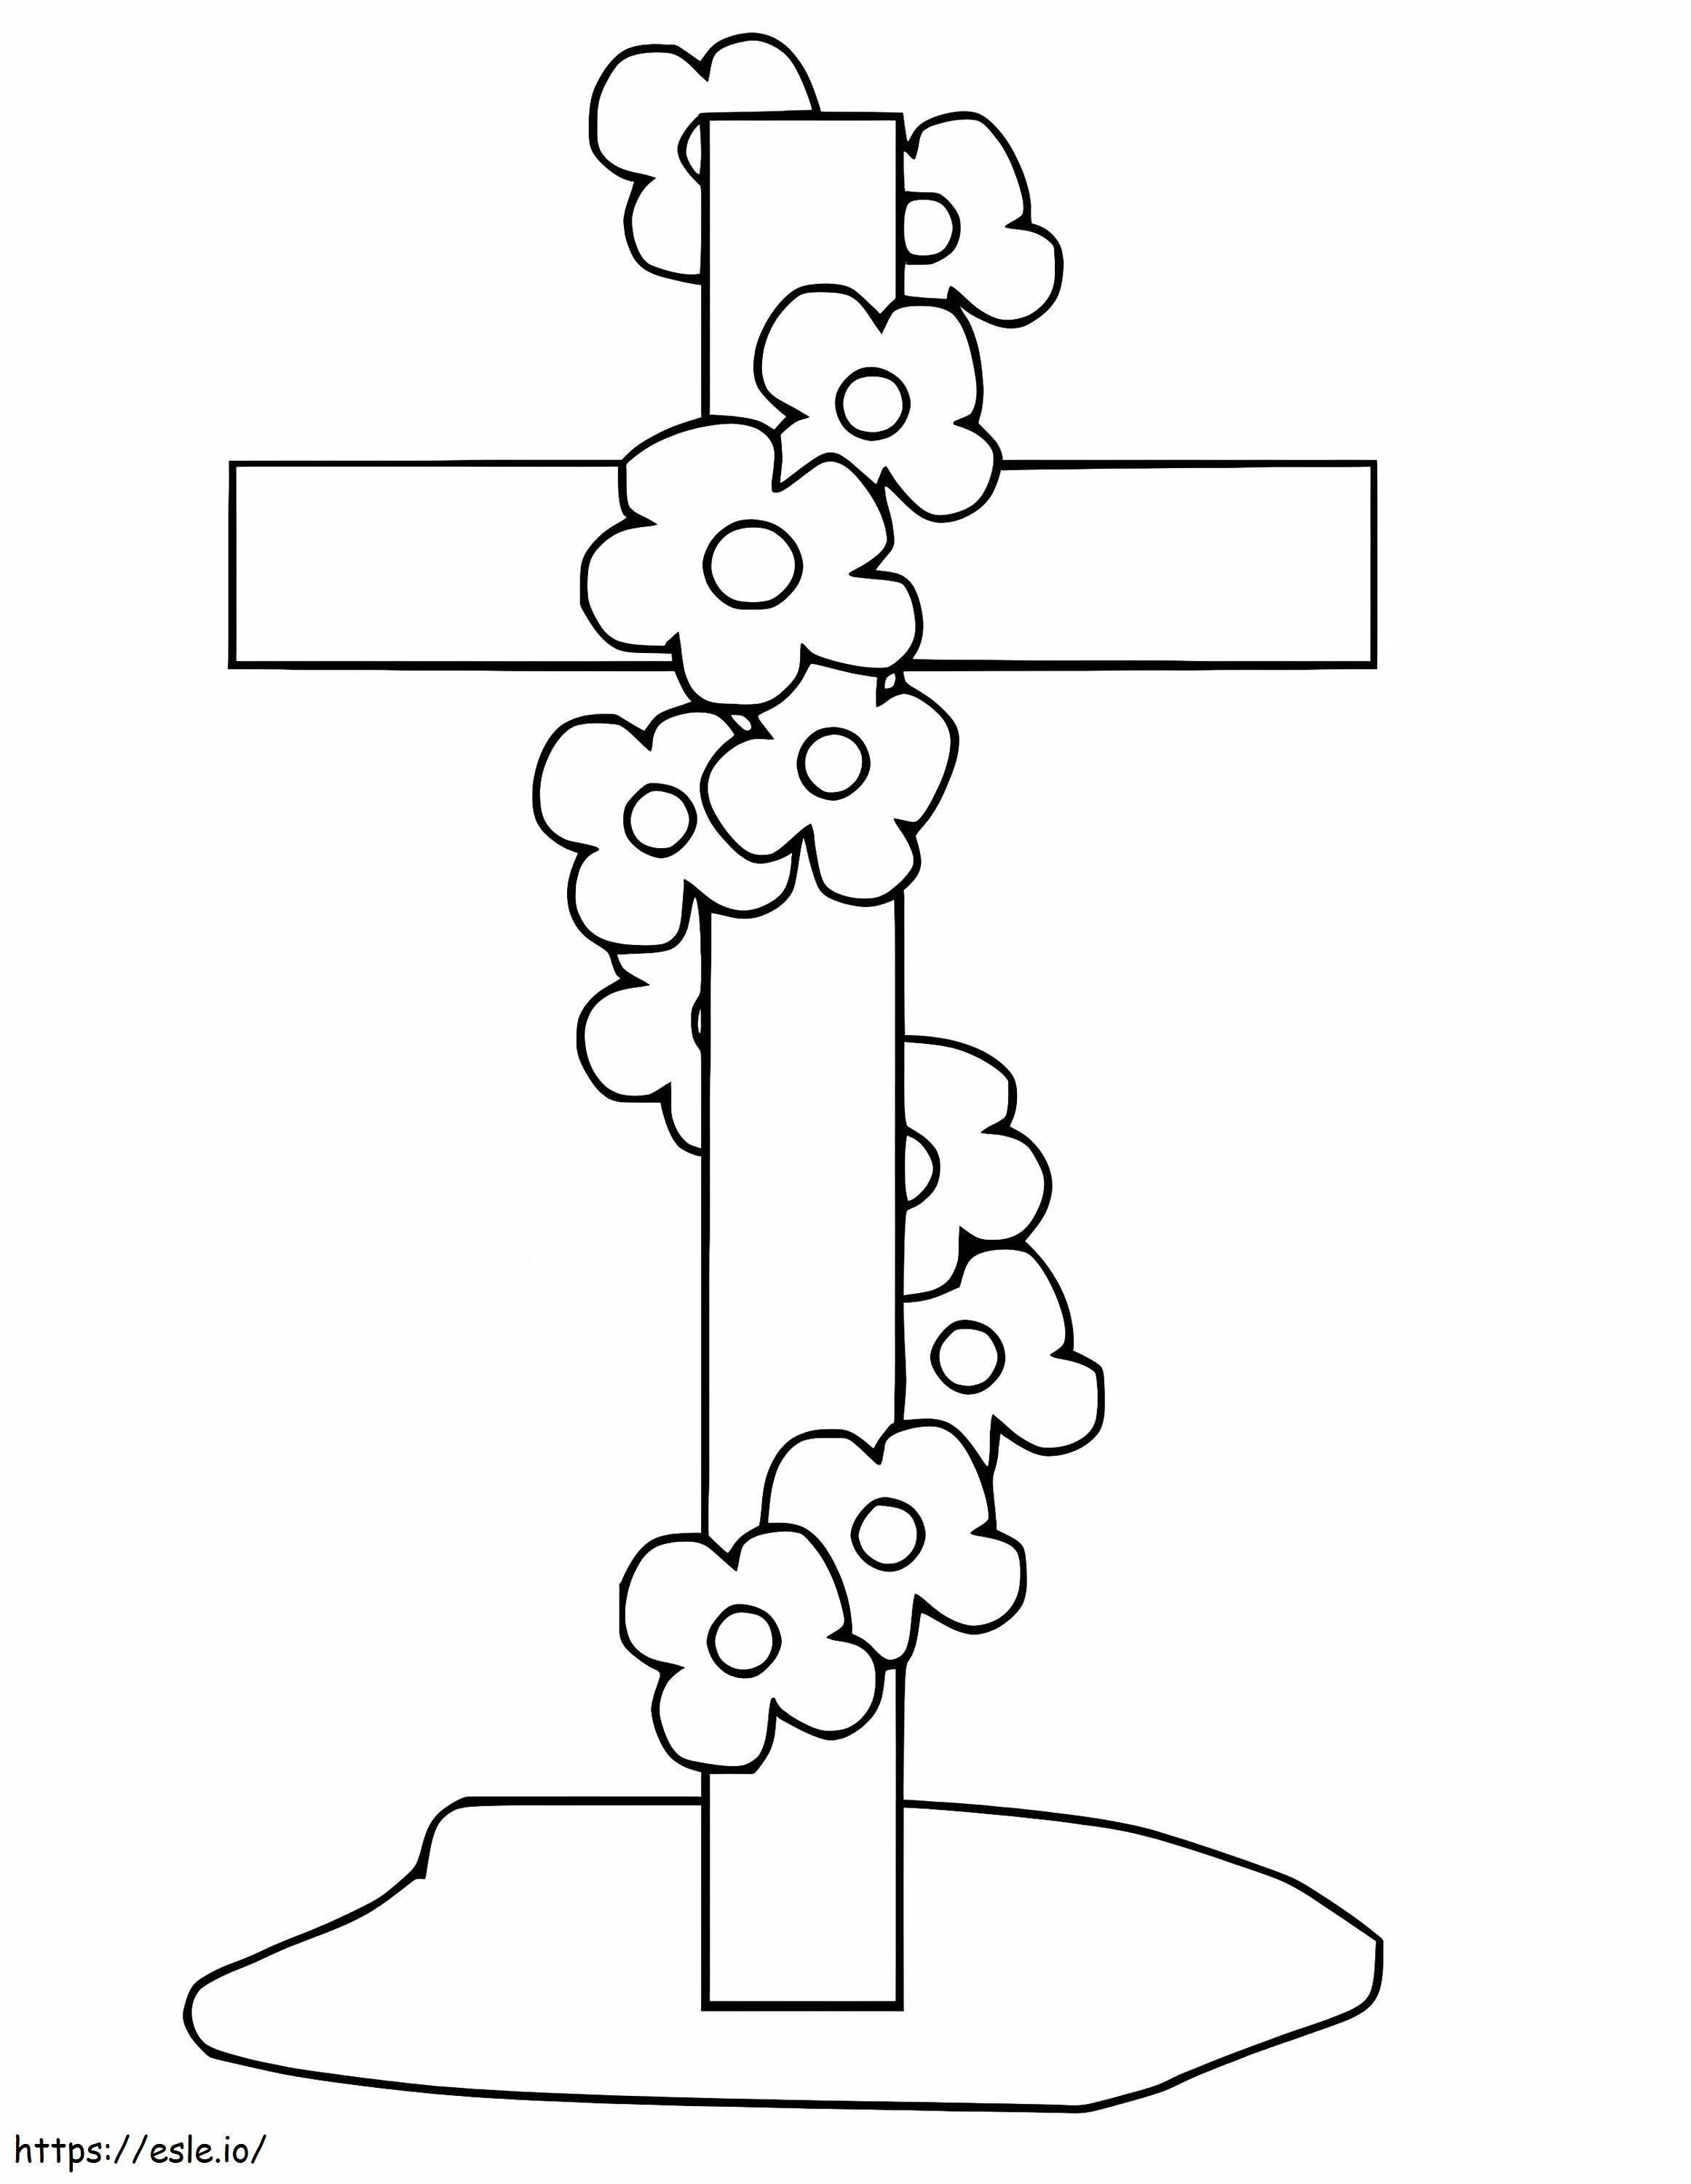 Cruz de Páscoa fácil para colorir